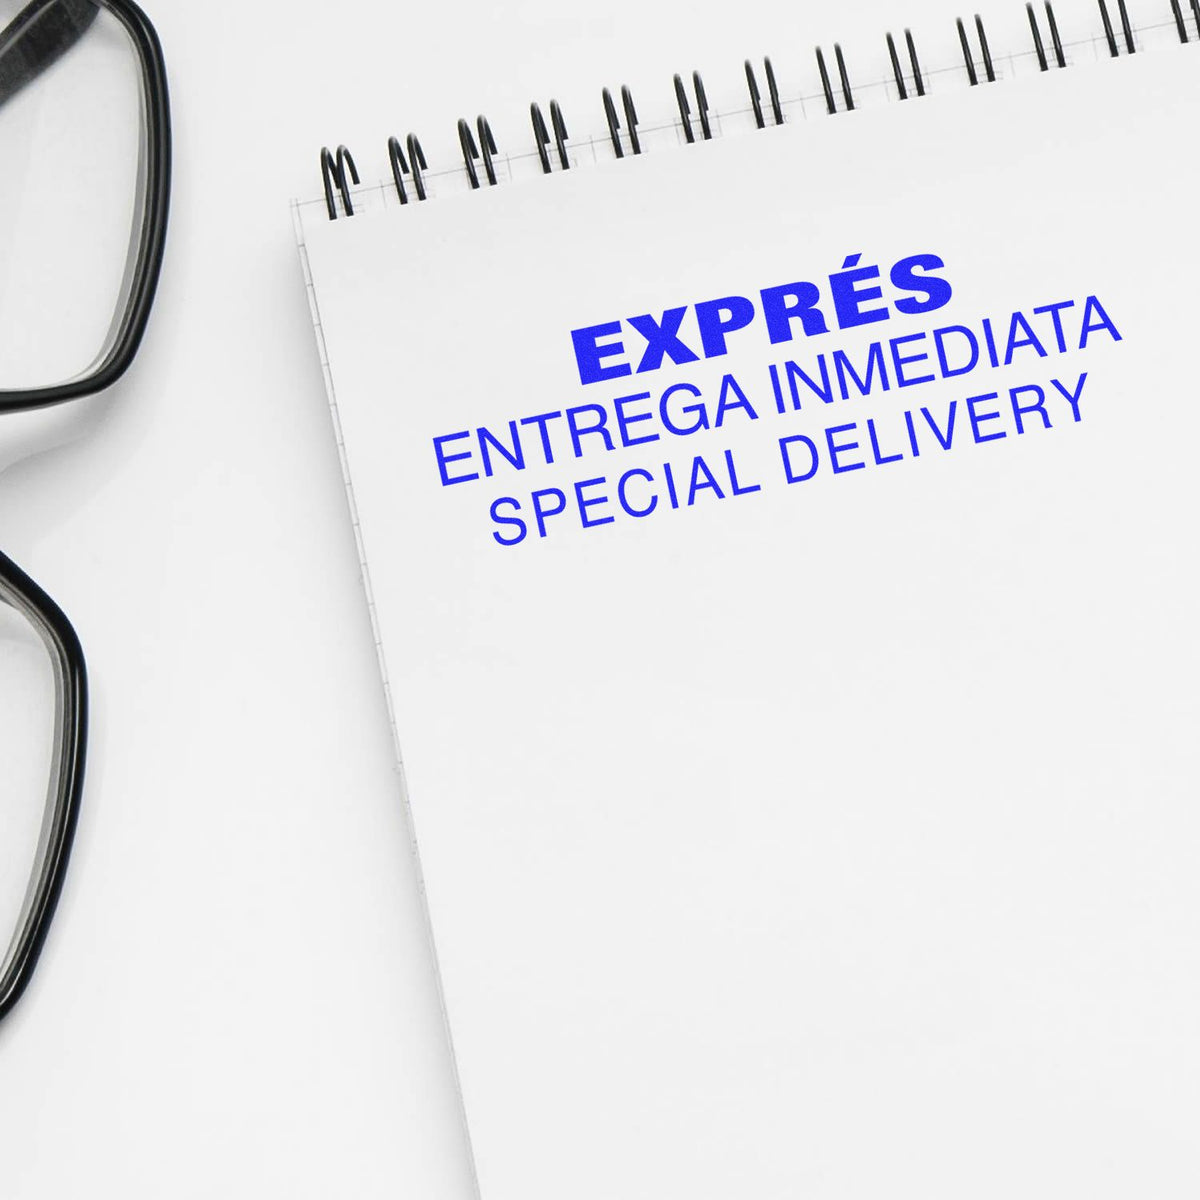 Expres Entrega Inmedia Rubber Stamp In Use Photo